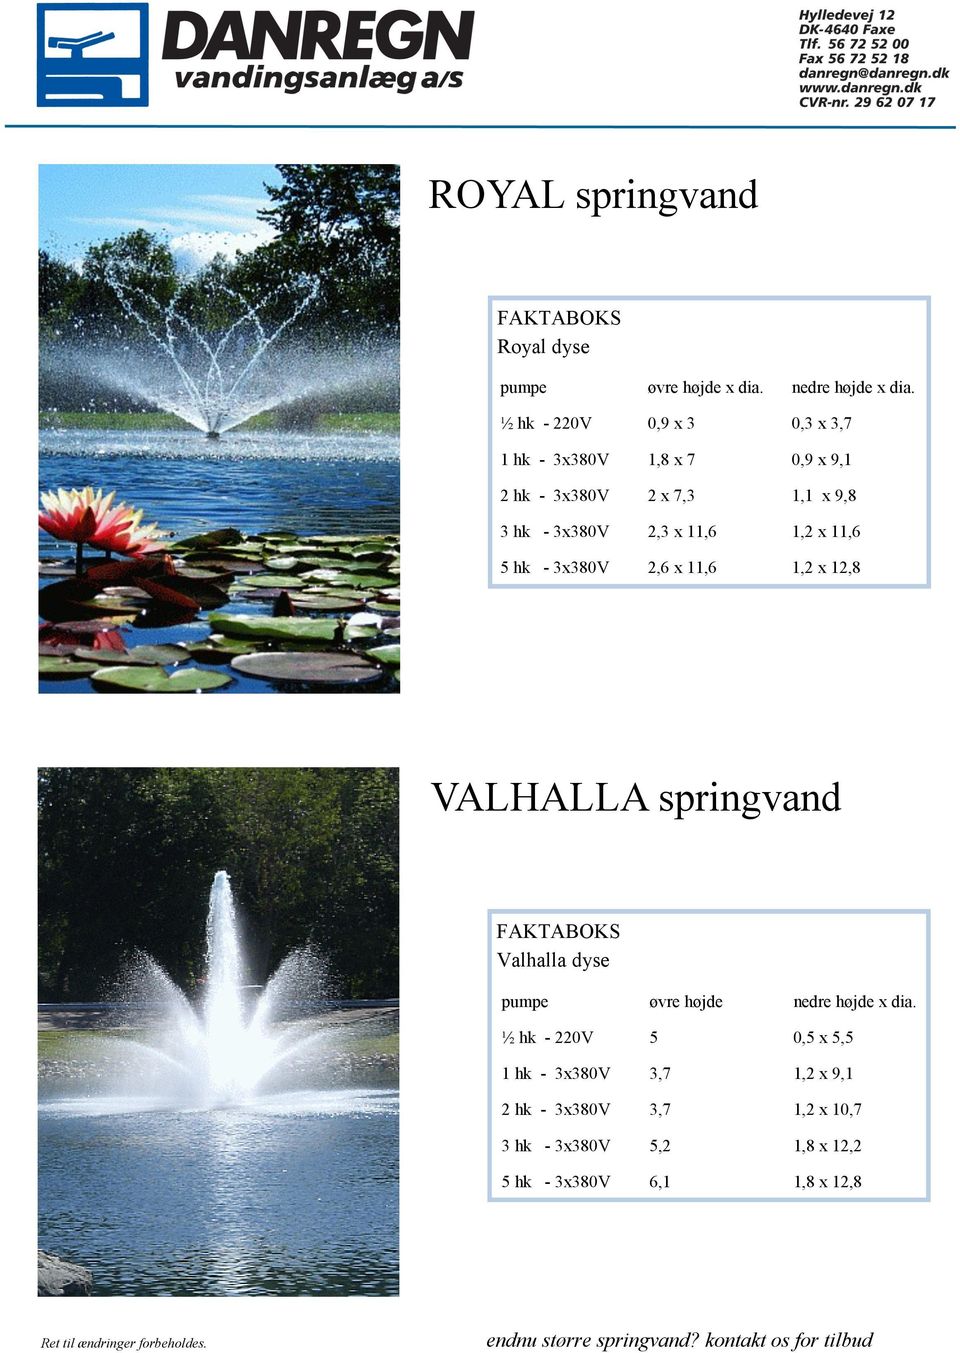 springvand Valhalla dyse øvre højde nedre ½ hk - 220V 5 0,5 x 5,5 1 hk - 3x380V 3,7 1,2 x 9,1 2 hk - 3x380V